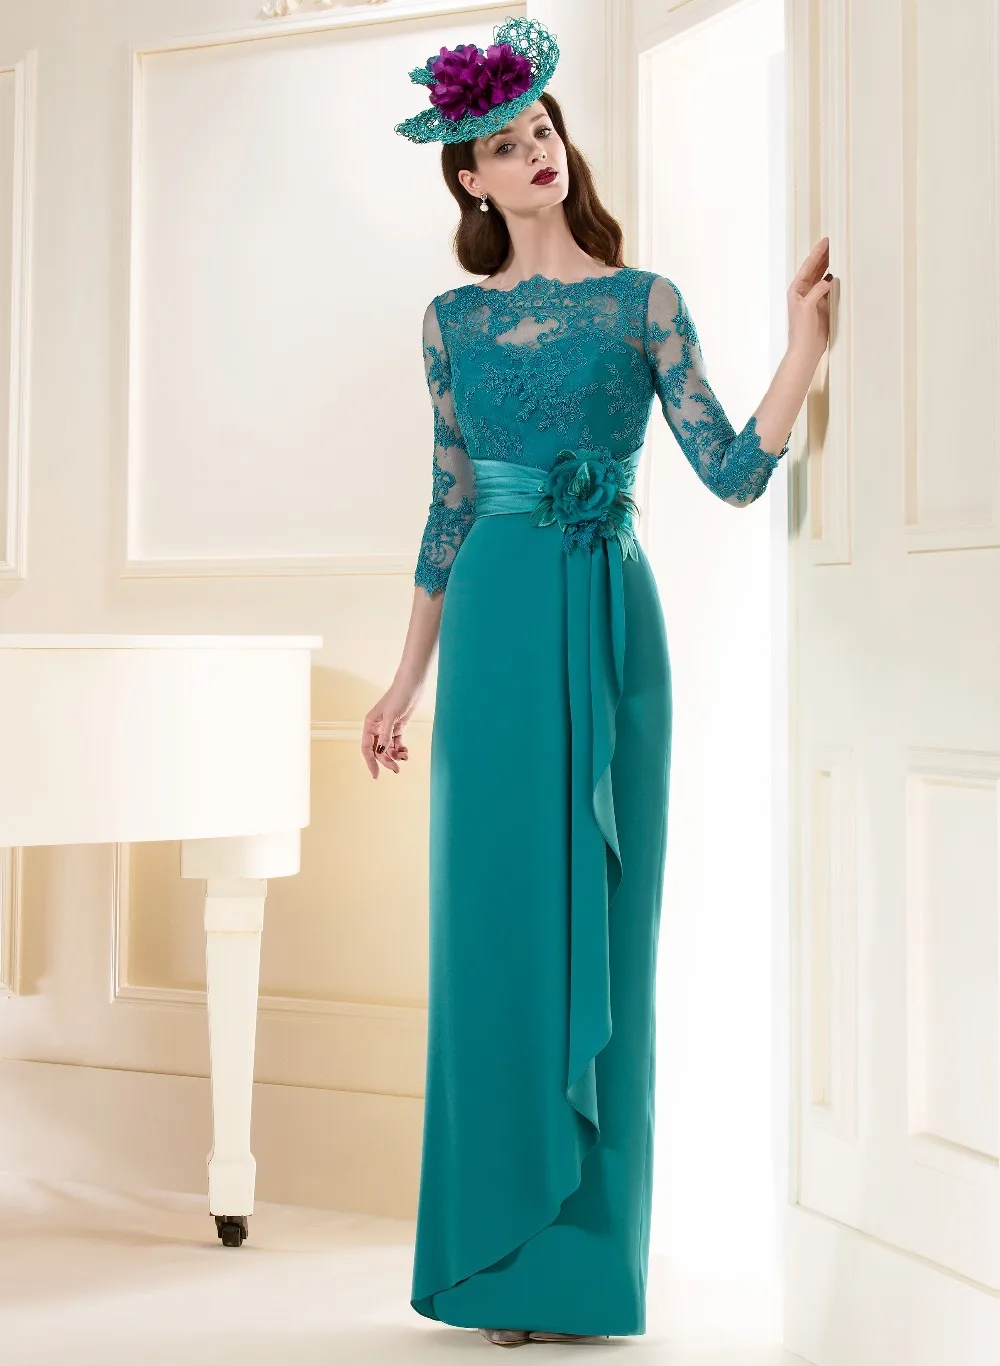 

Vestido De Festa Longo Renda Vestido De Noiva Turquoise Lace Elegant Long Sleeve Evening Gown 2023 Mother Of The Bride Dresses